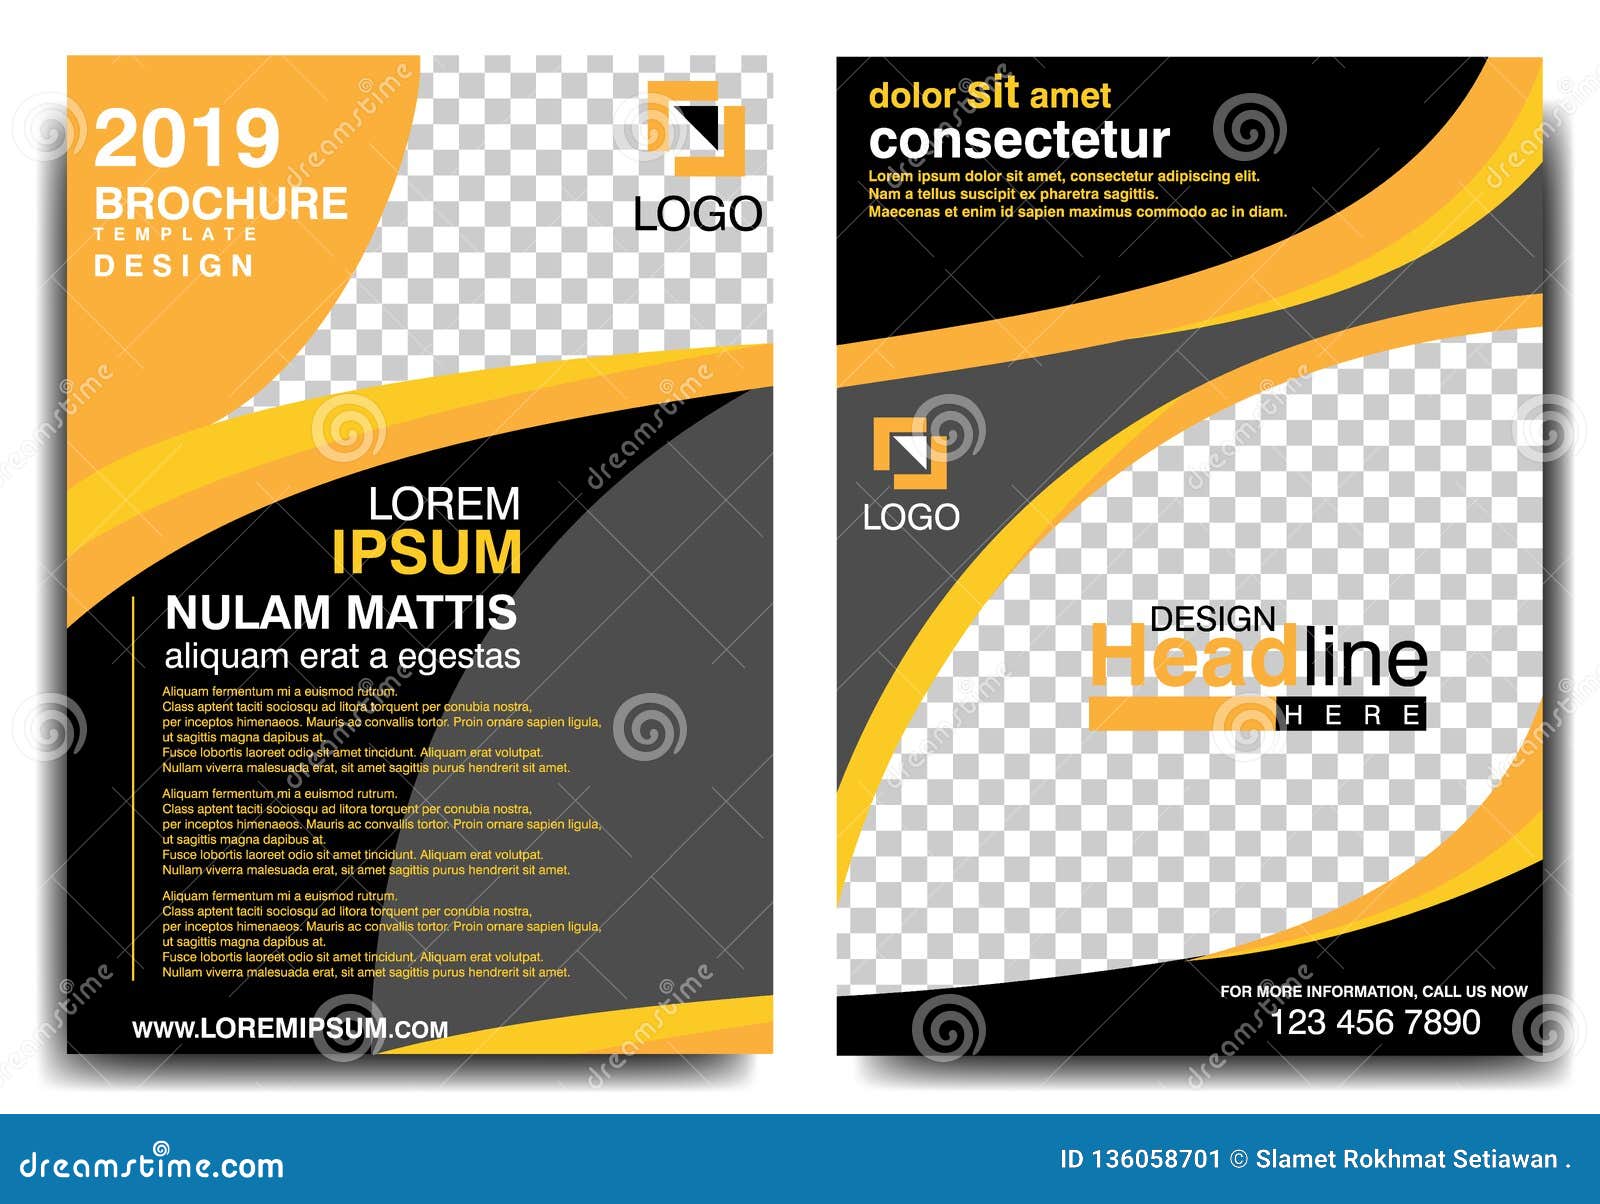 Modern Brochure Design Template 19 With Black And Orange Colors Stock Vector Illustration Of Flyer Design